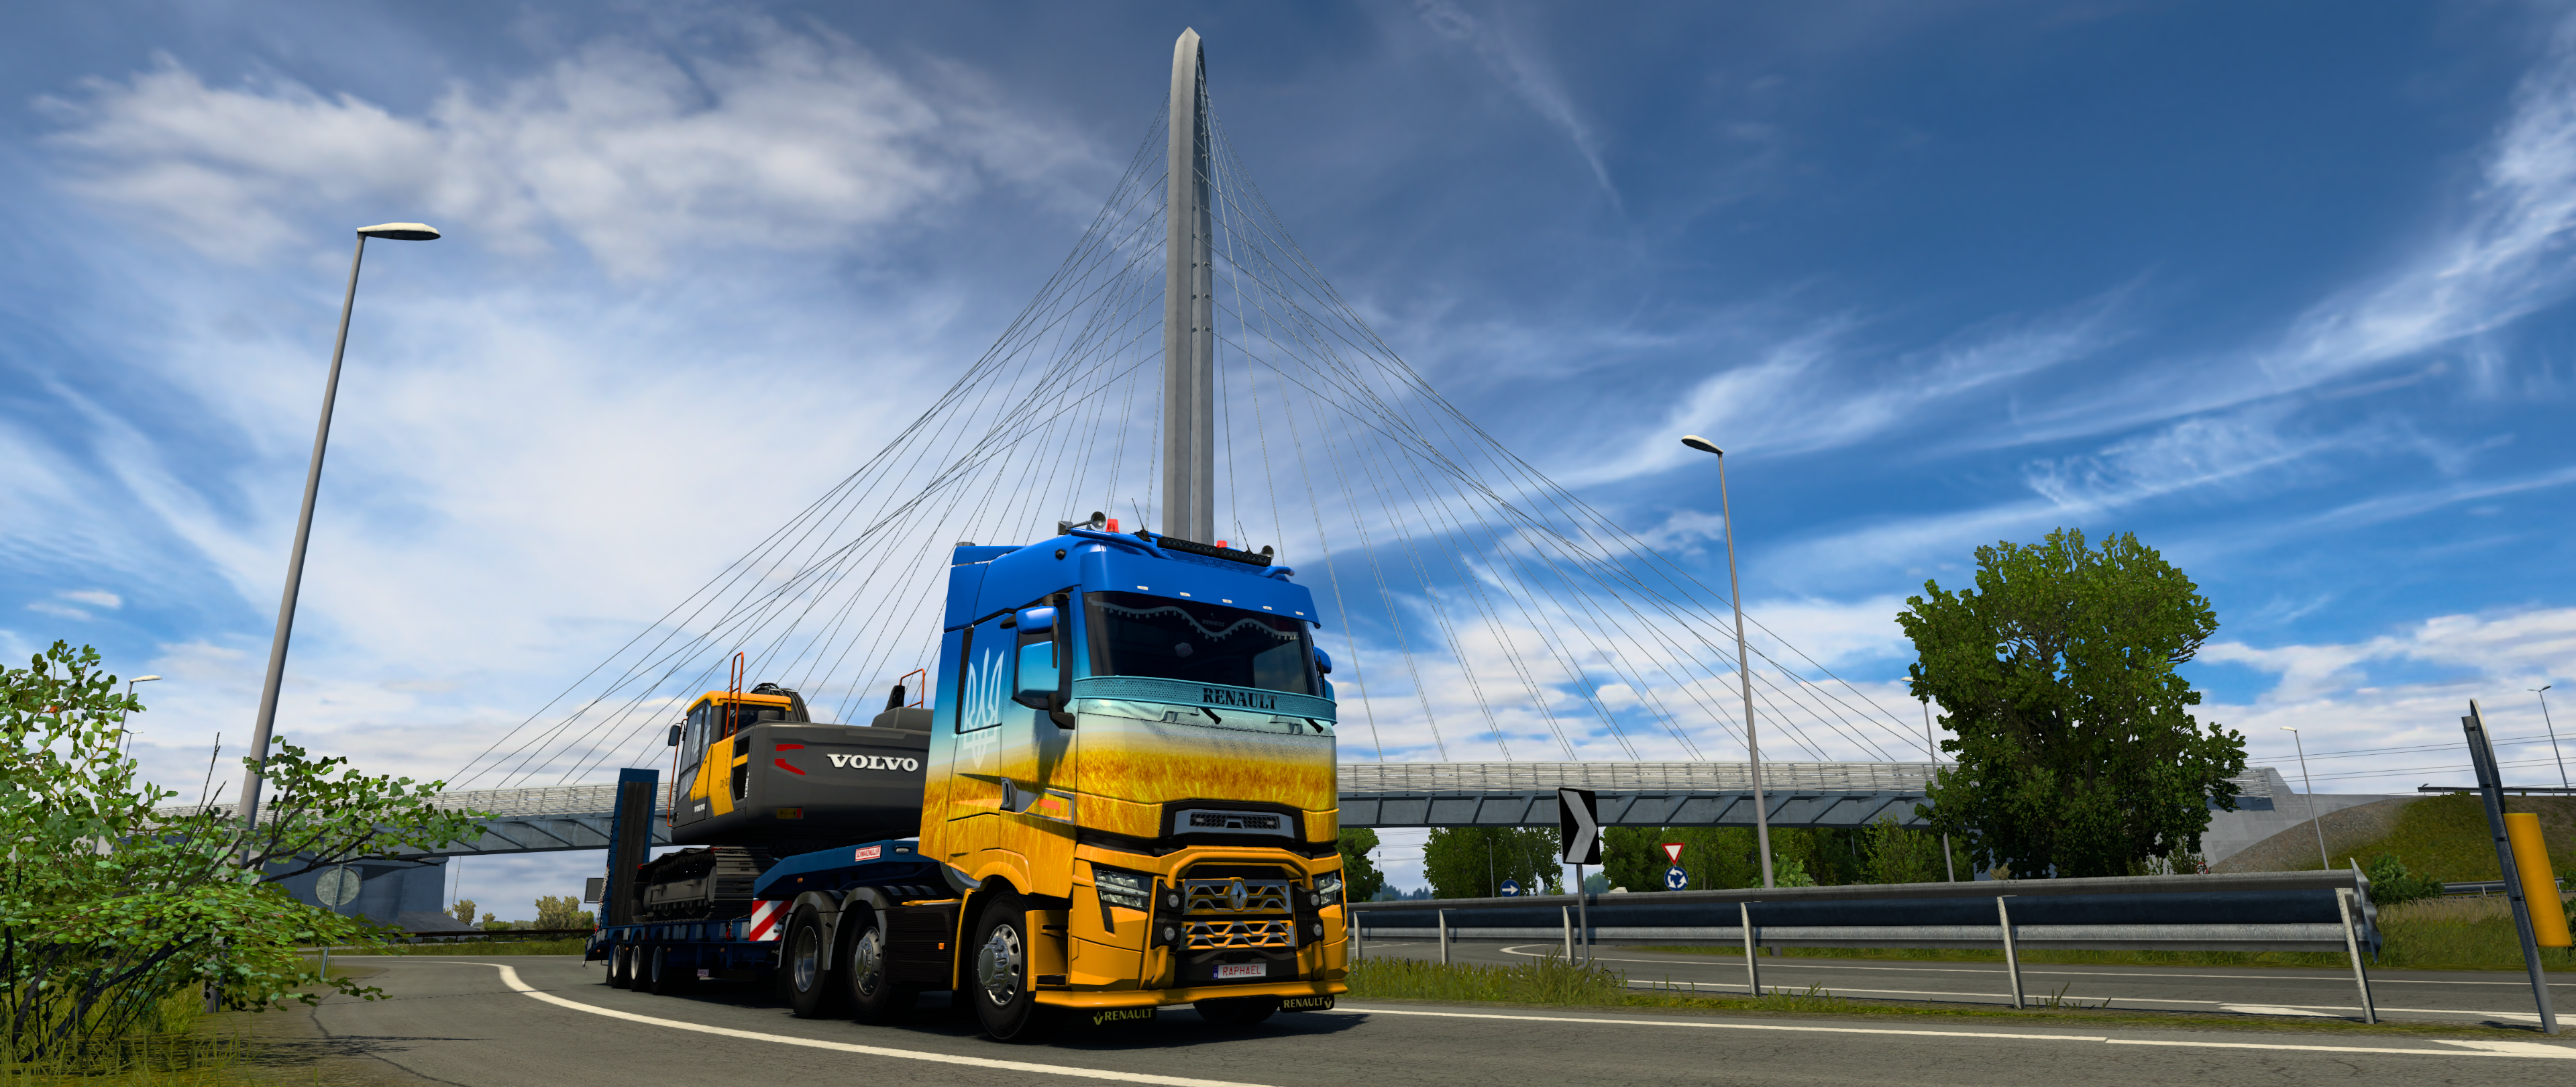 General 3840x1620 landscape bridge Euro Truck Simulator 2 video games truck clouds sky CGI screen shot Ukrainian